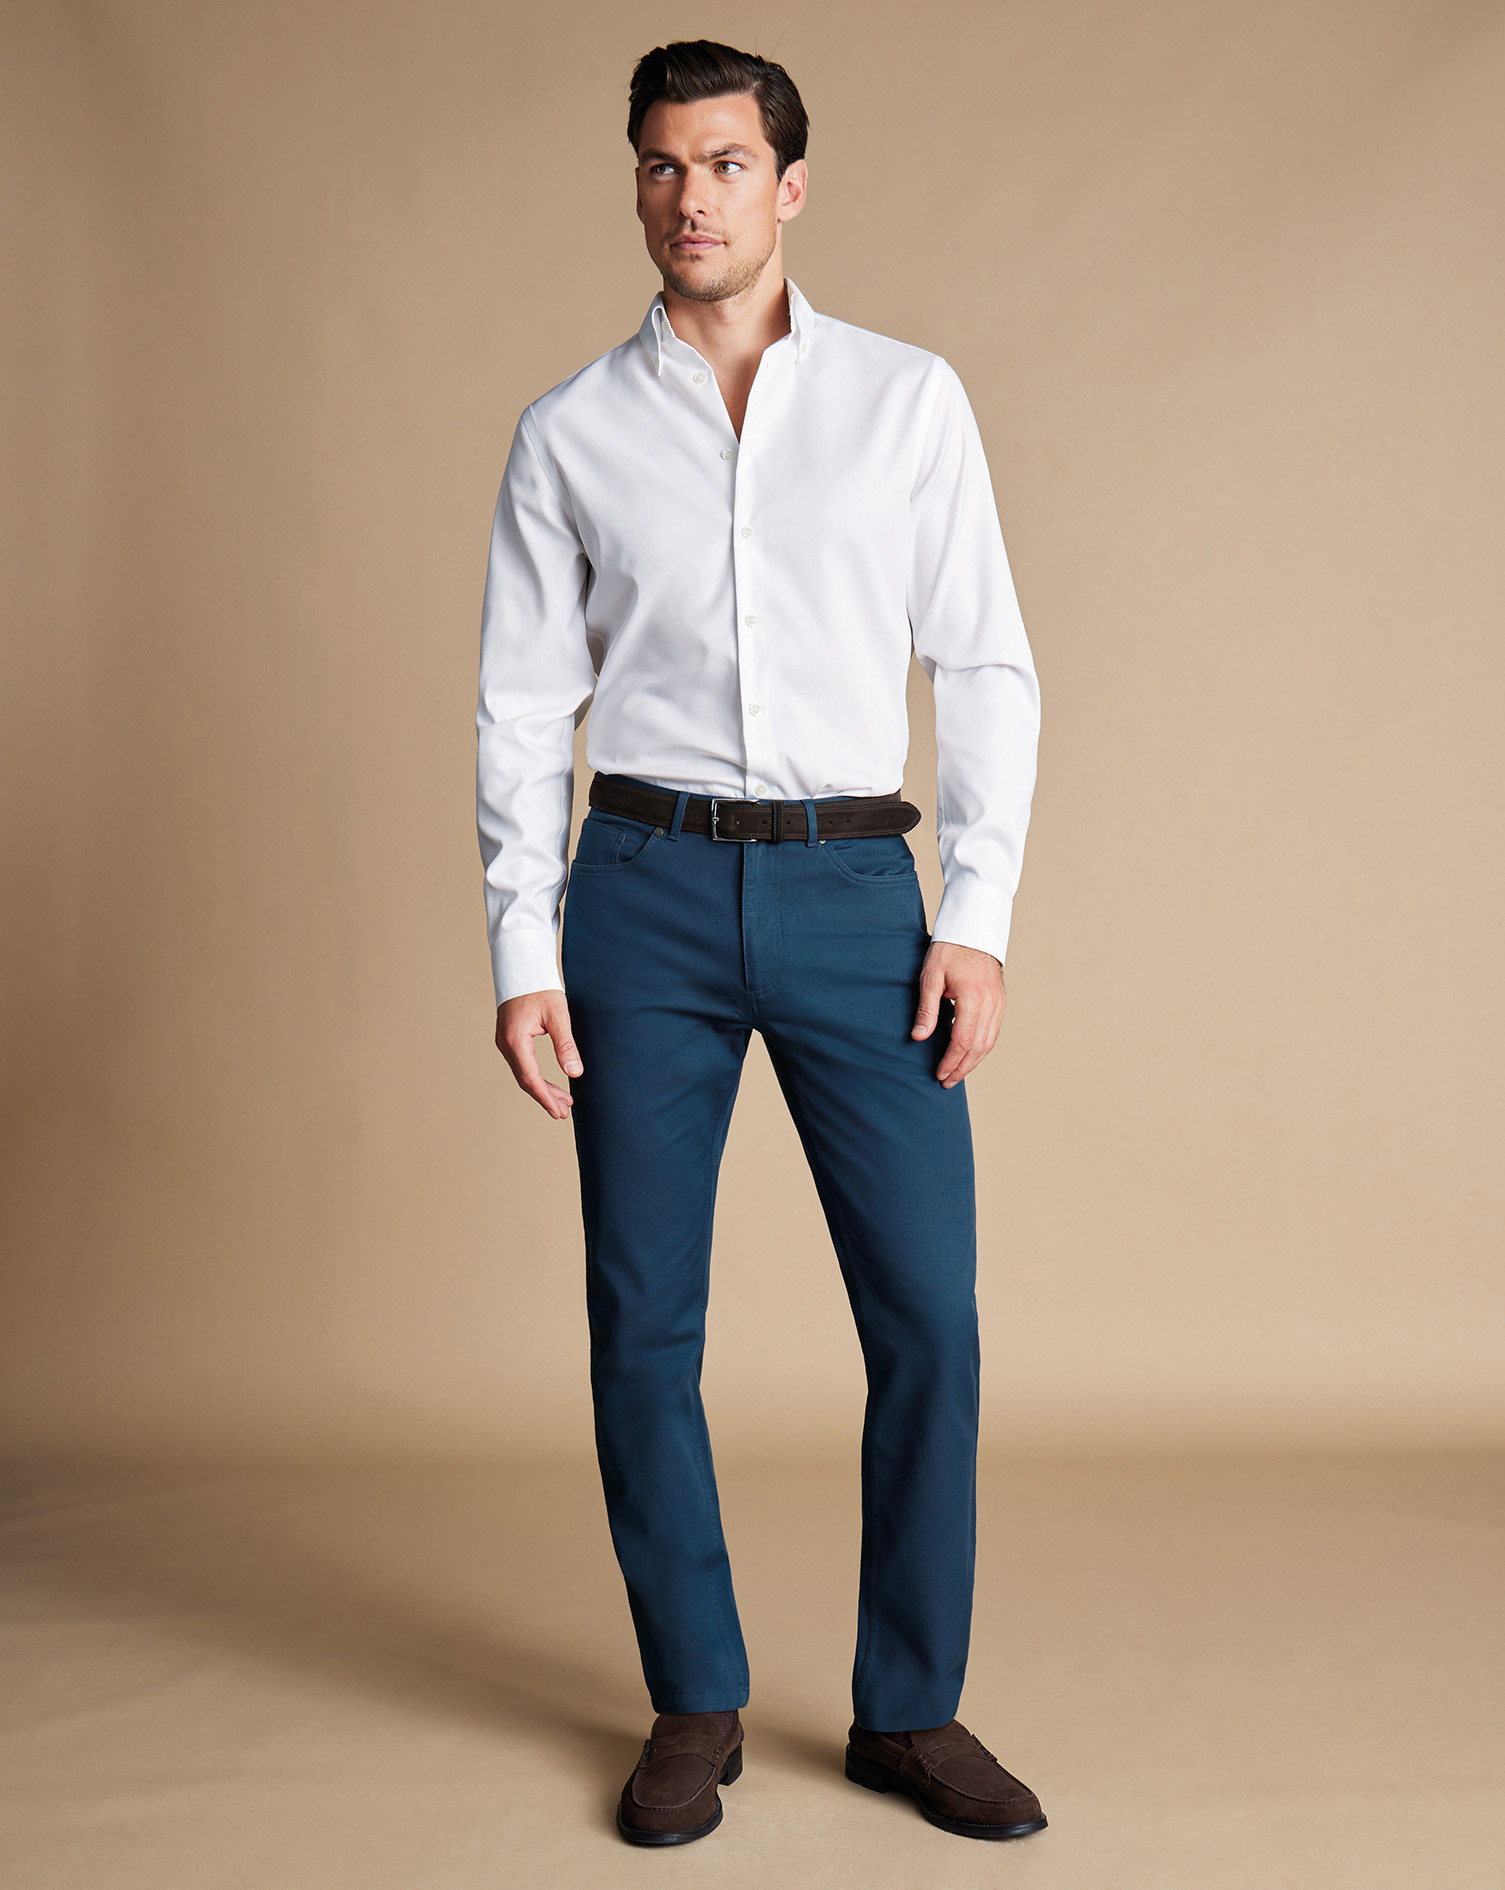 Men's Charles Tyrwhitt Twill 5 Pocket Jeans - Petrol Blue Size W36 L34 Cotton
